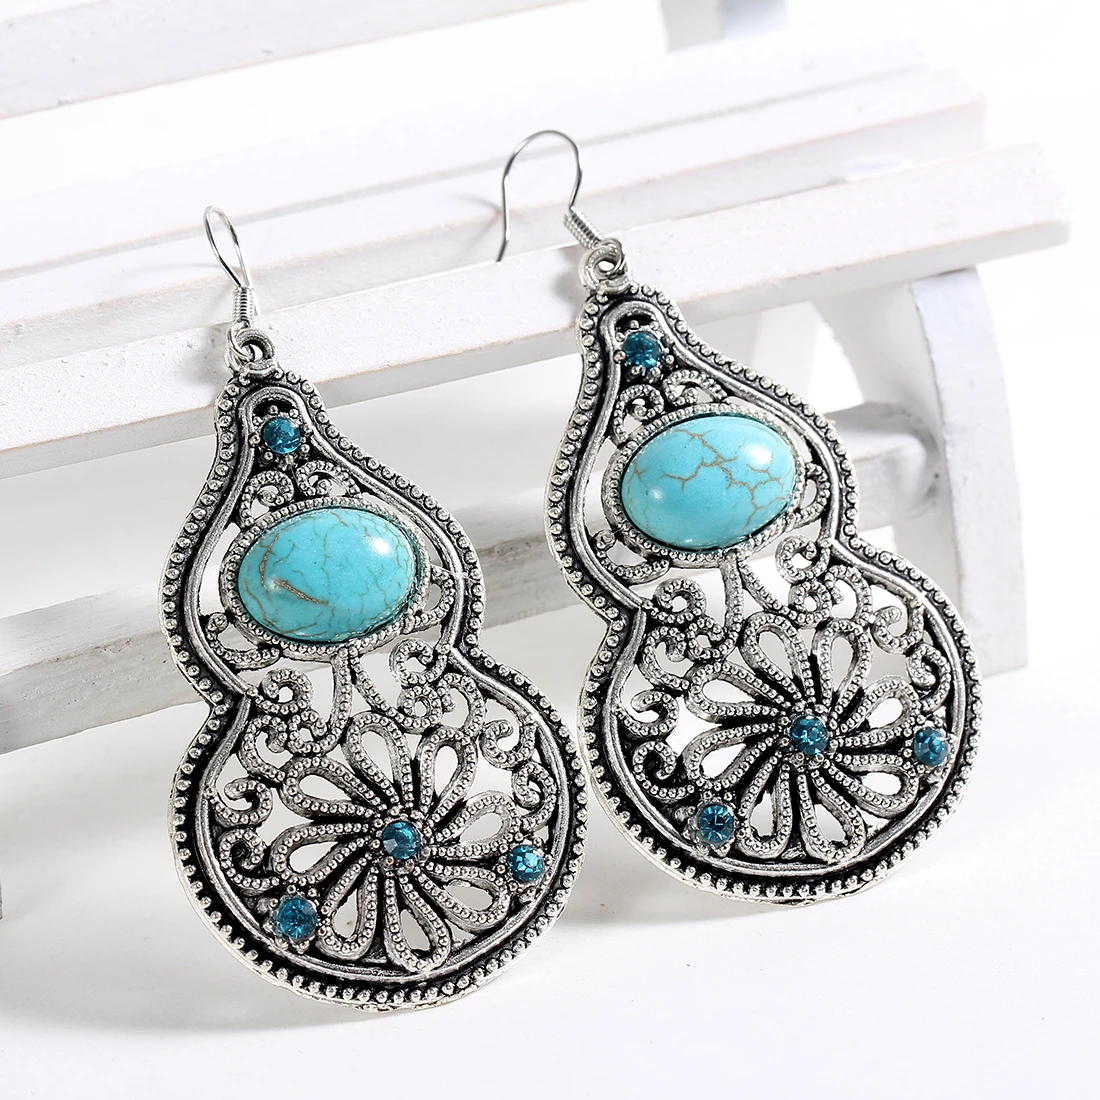 MINHIN Vintage Drop Dangle Earrings for Women Blue Beads Pendant Charming Silver Color Earrings Party Jewelry